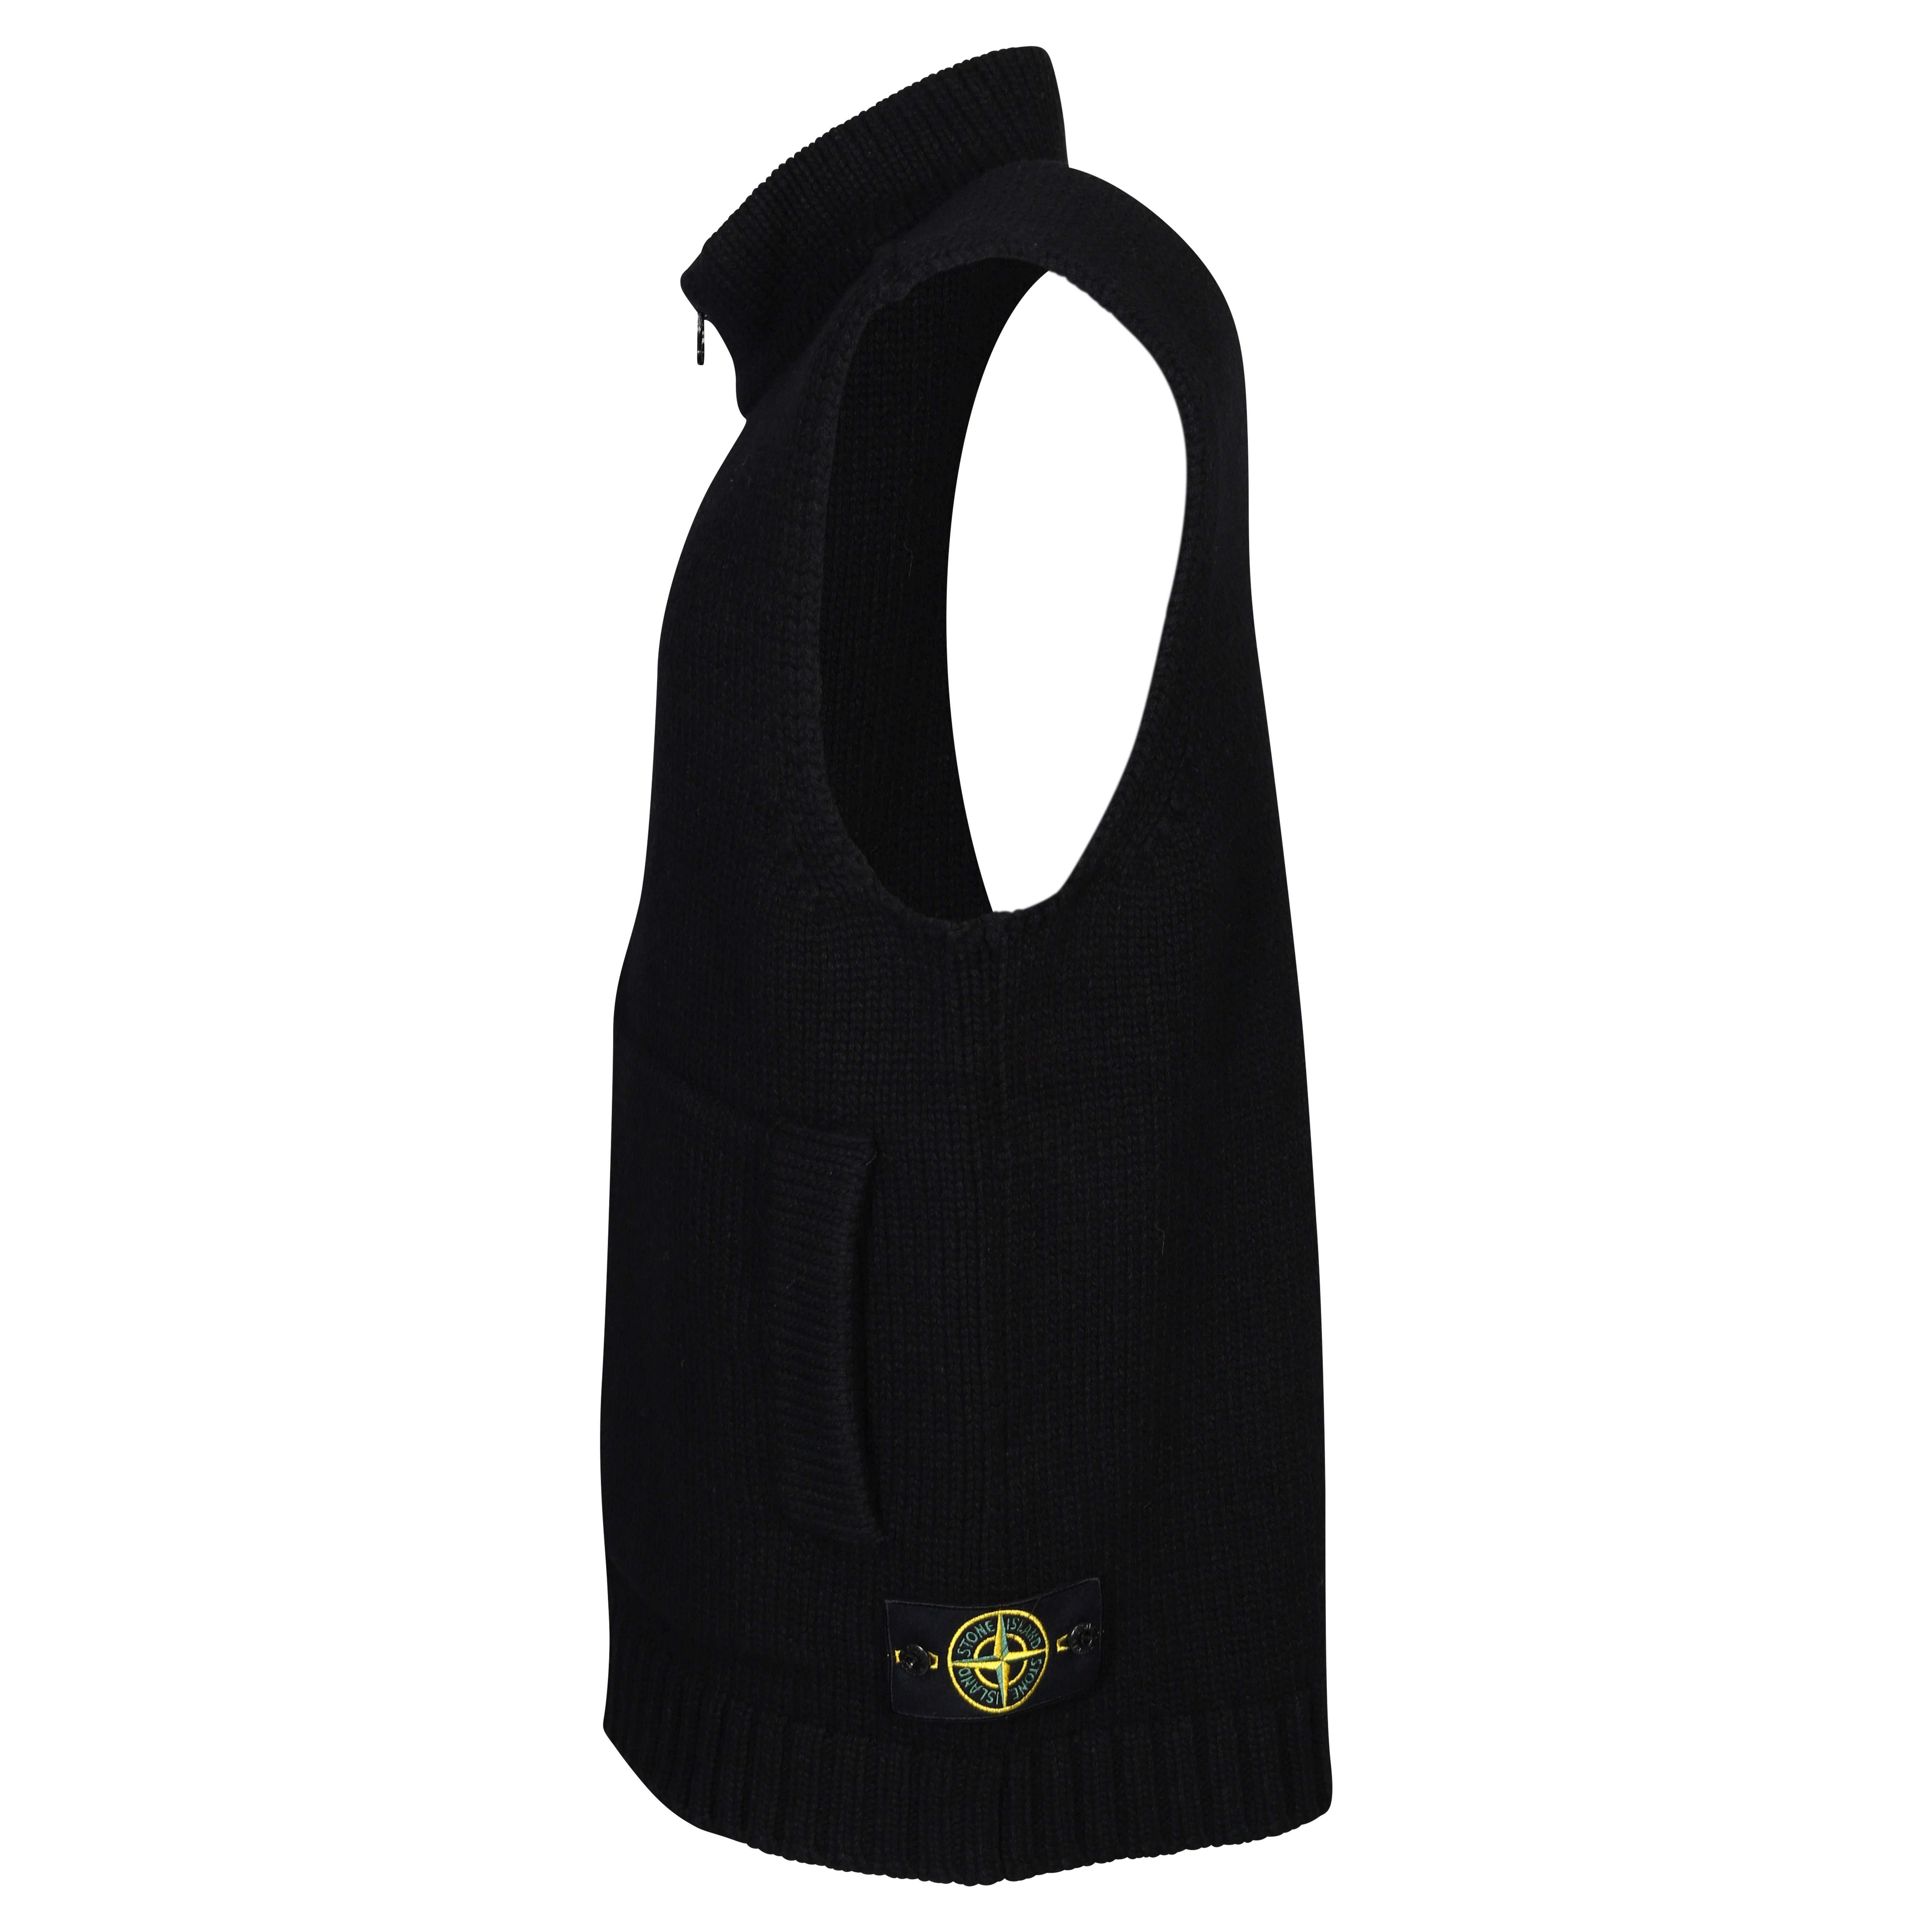 Stone Island Knit Zip Vest in Black